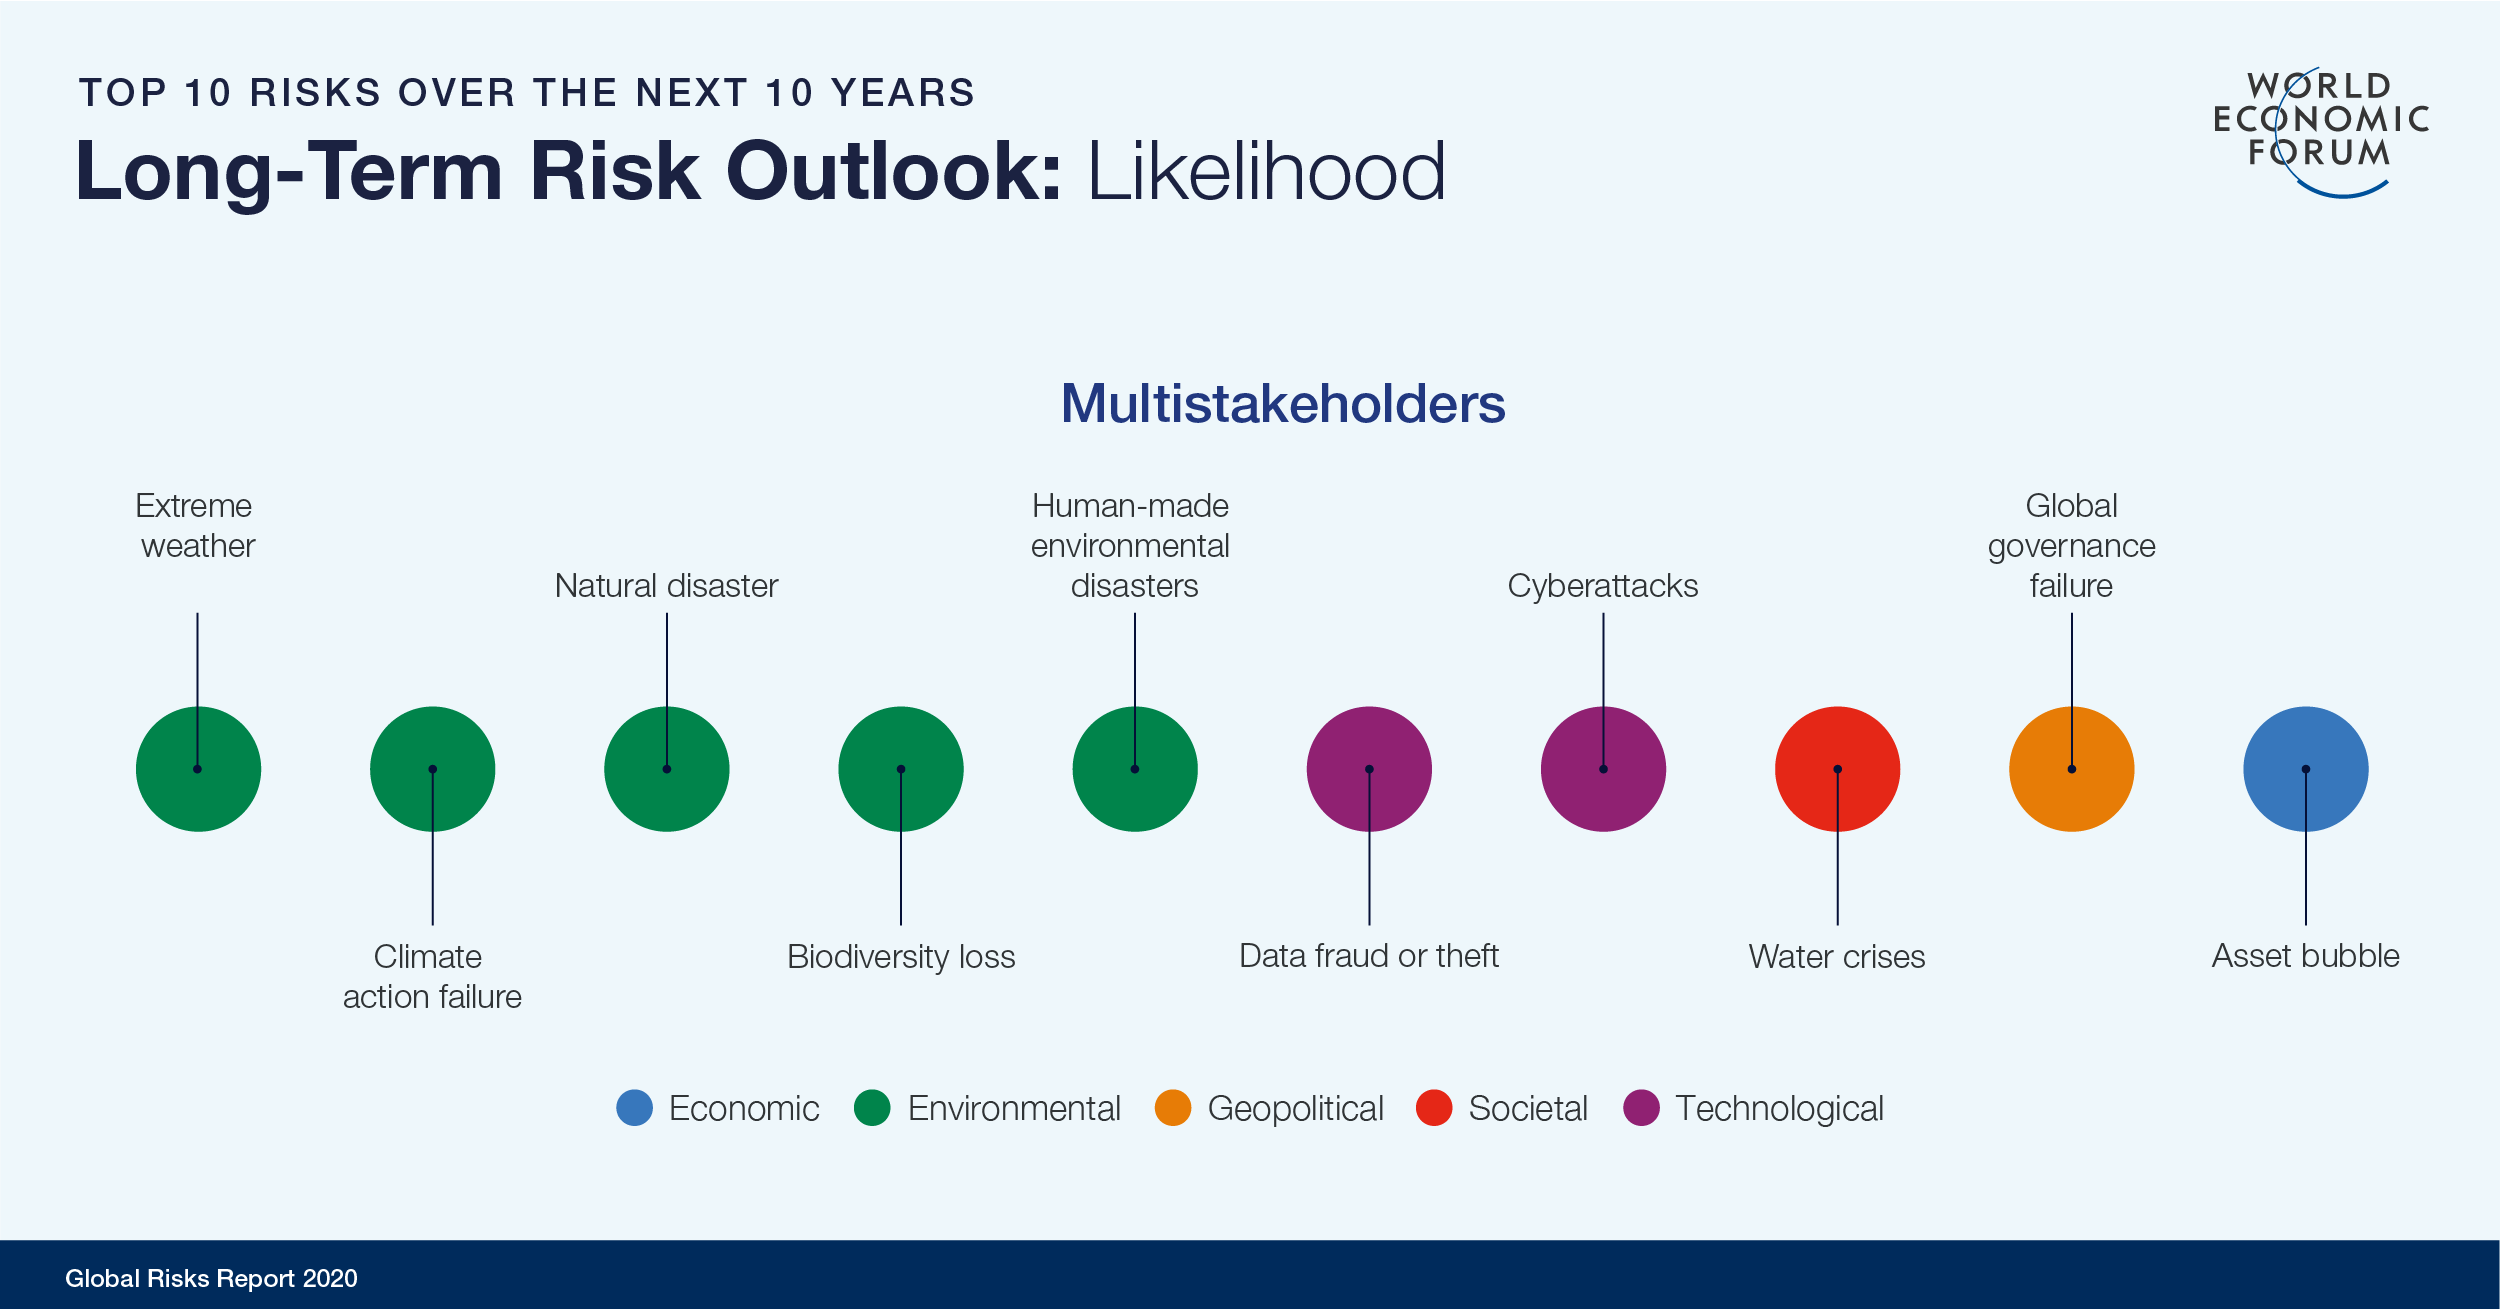 WEF Global Risks Report 2020 Top 10 risks in terms of likelihood